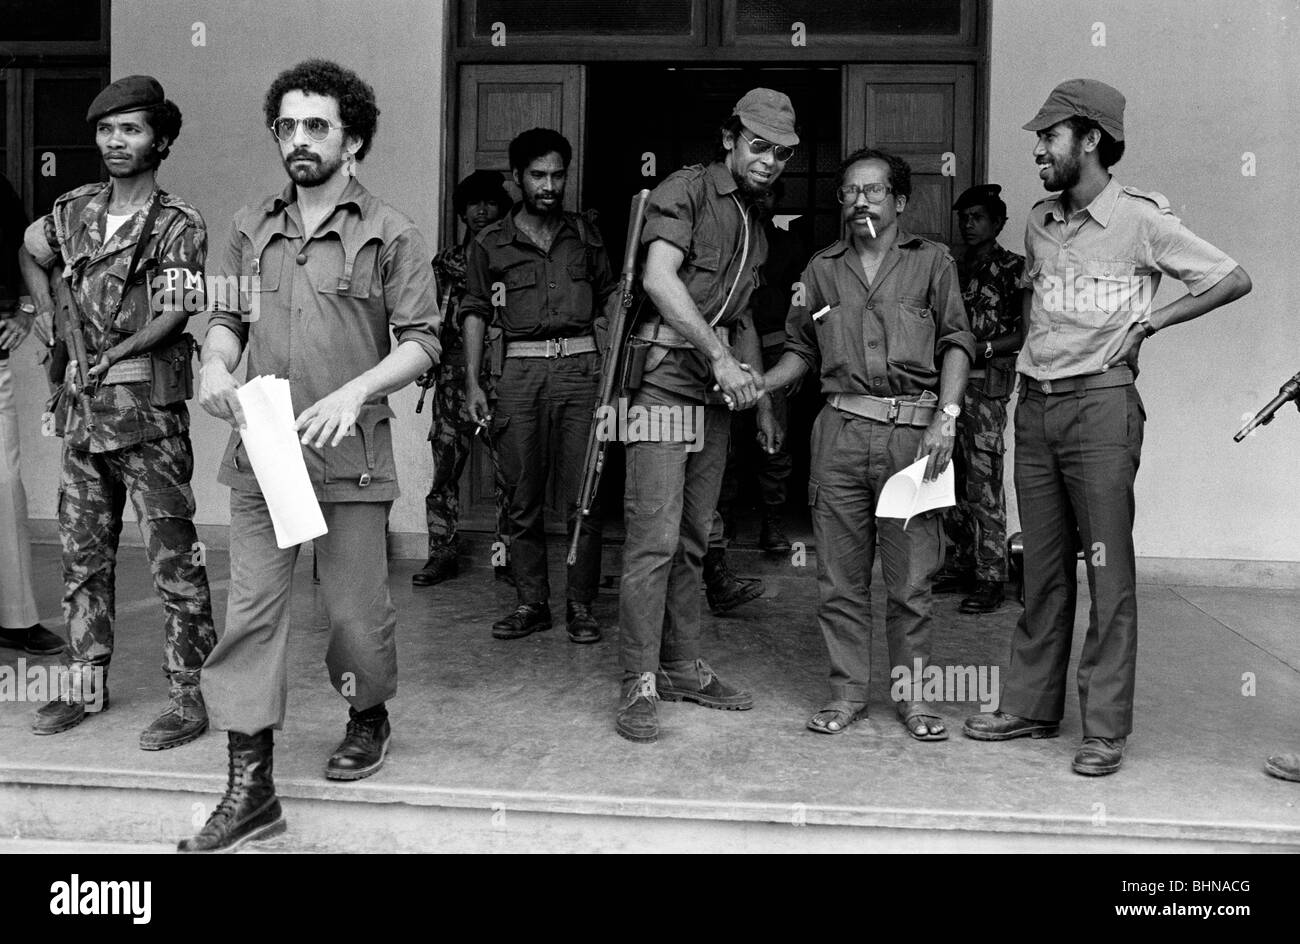 Jose Ramos-Horta leaving president Xavier do Amaral's HQ Dili East Timor 1975. Future presidents present - Lobarto and Jose RH Stock Photo